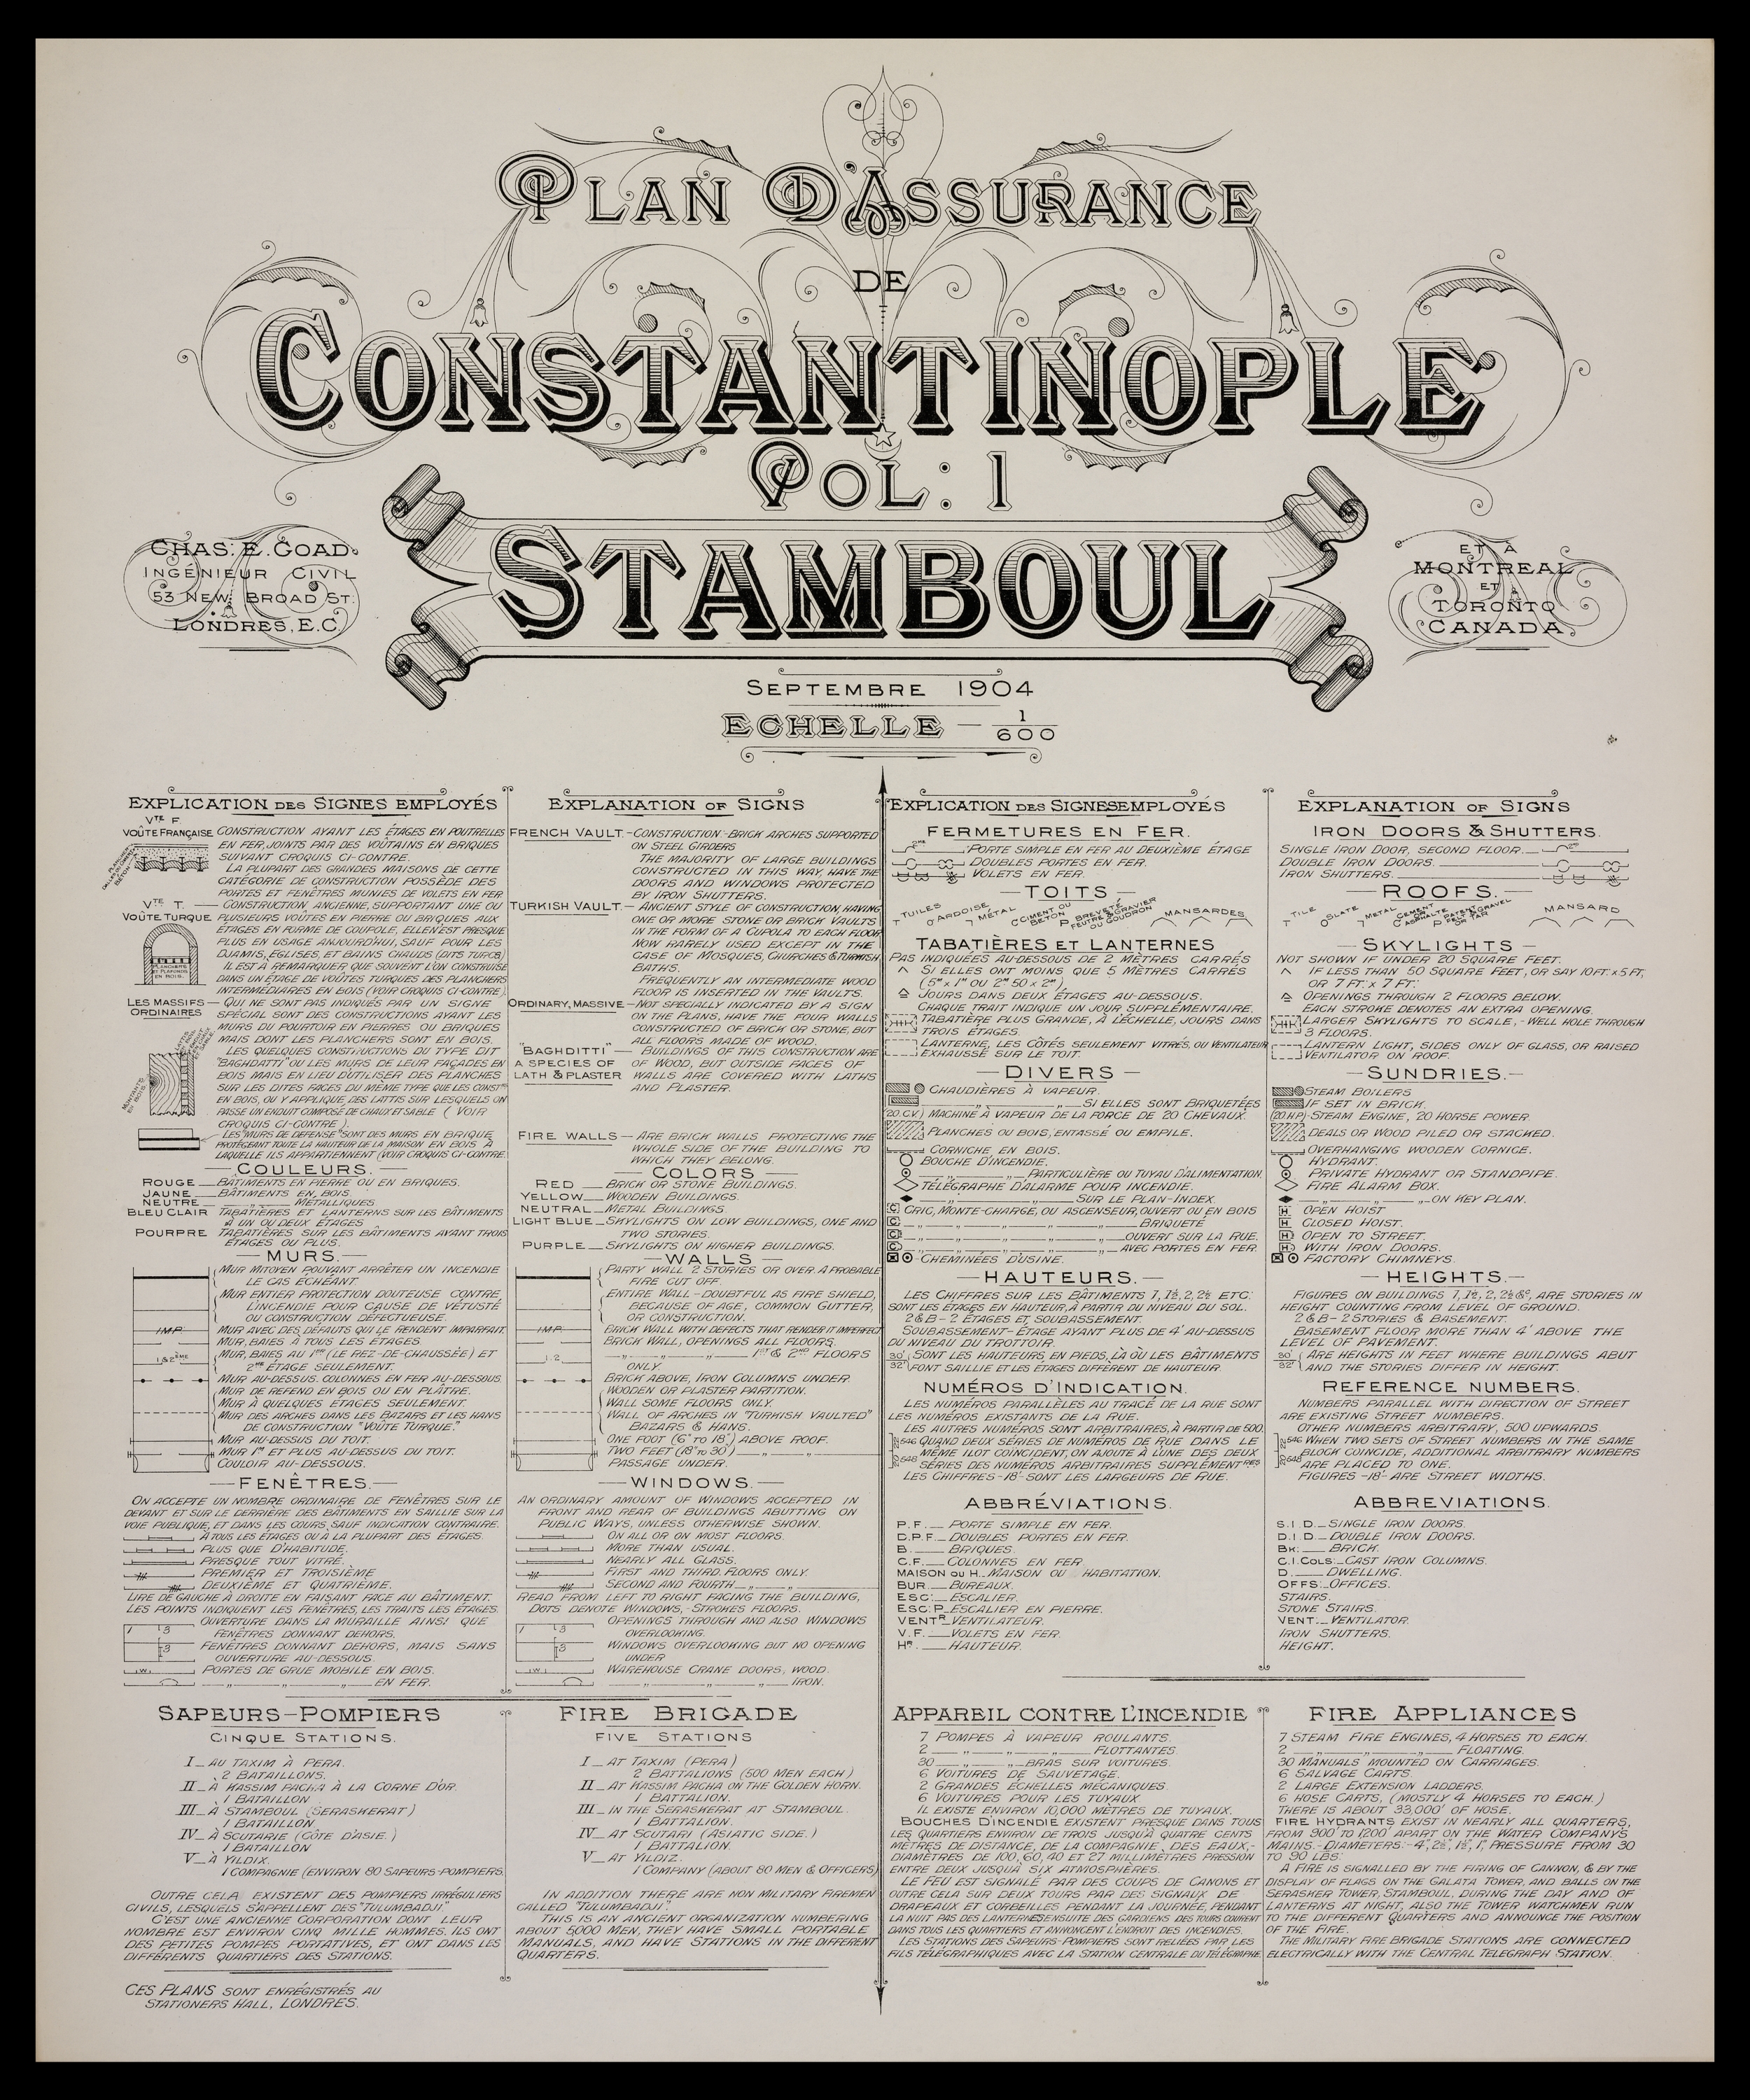 Explication des Signes Employes (Explanation of Signs), Plan d'Assurance de Constantinople, Vol. I, Stamboul